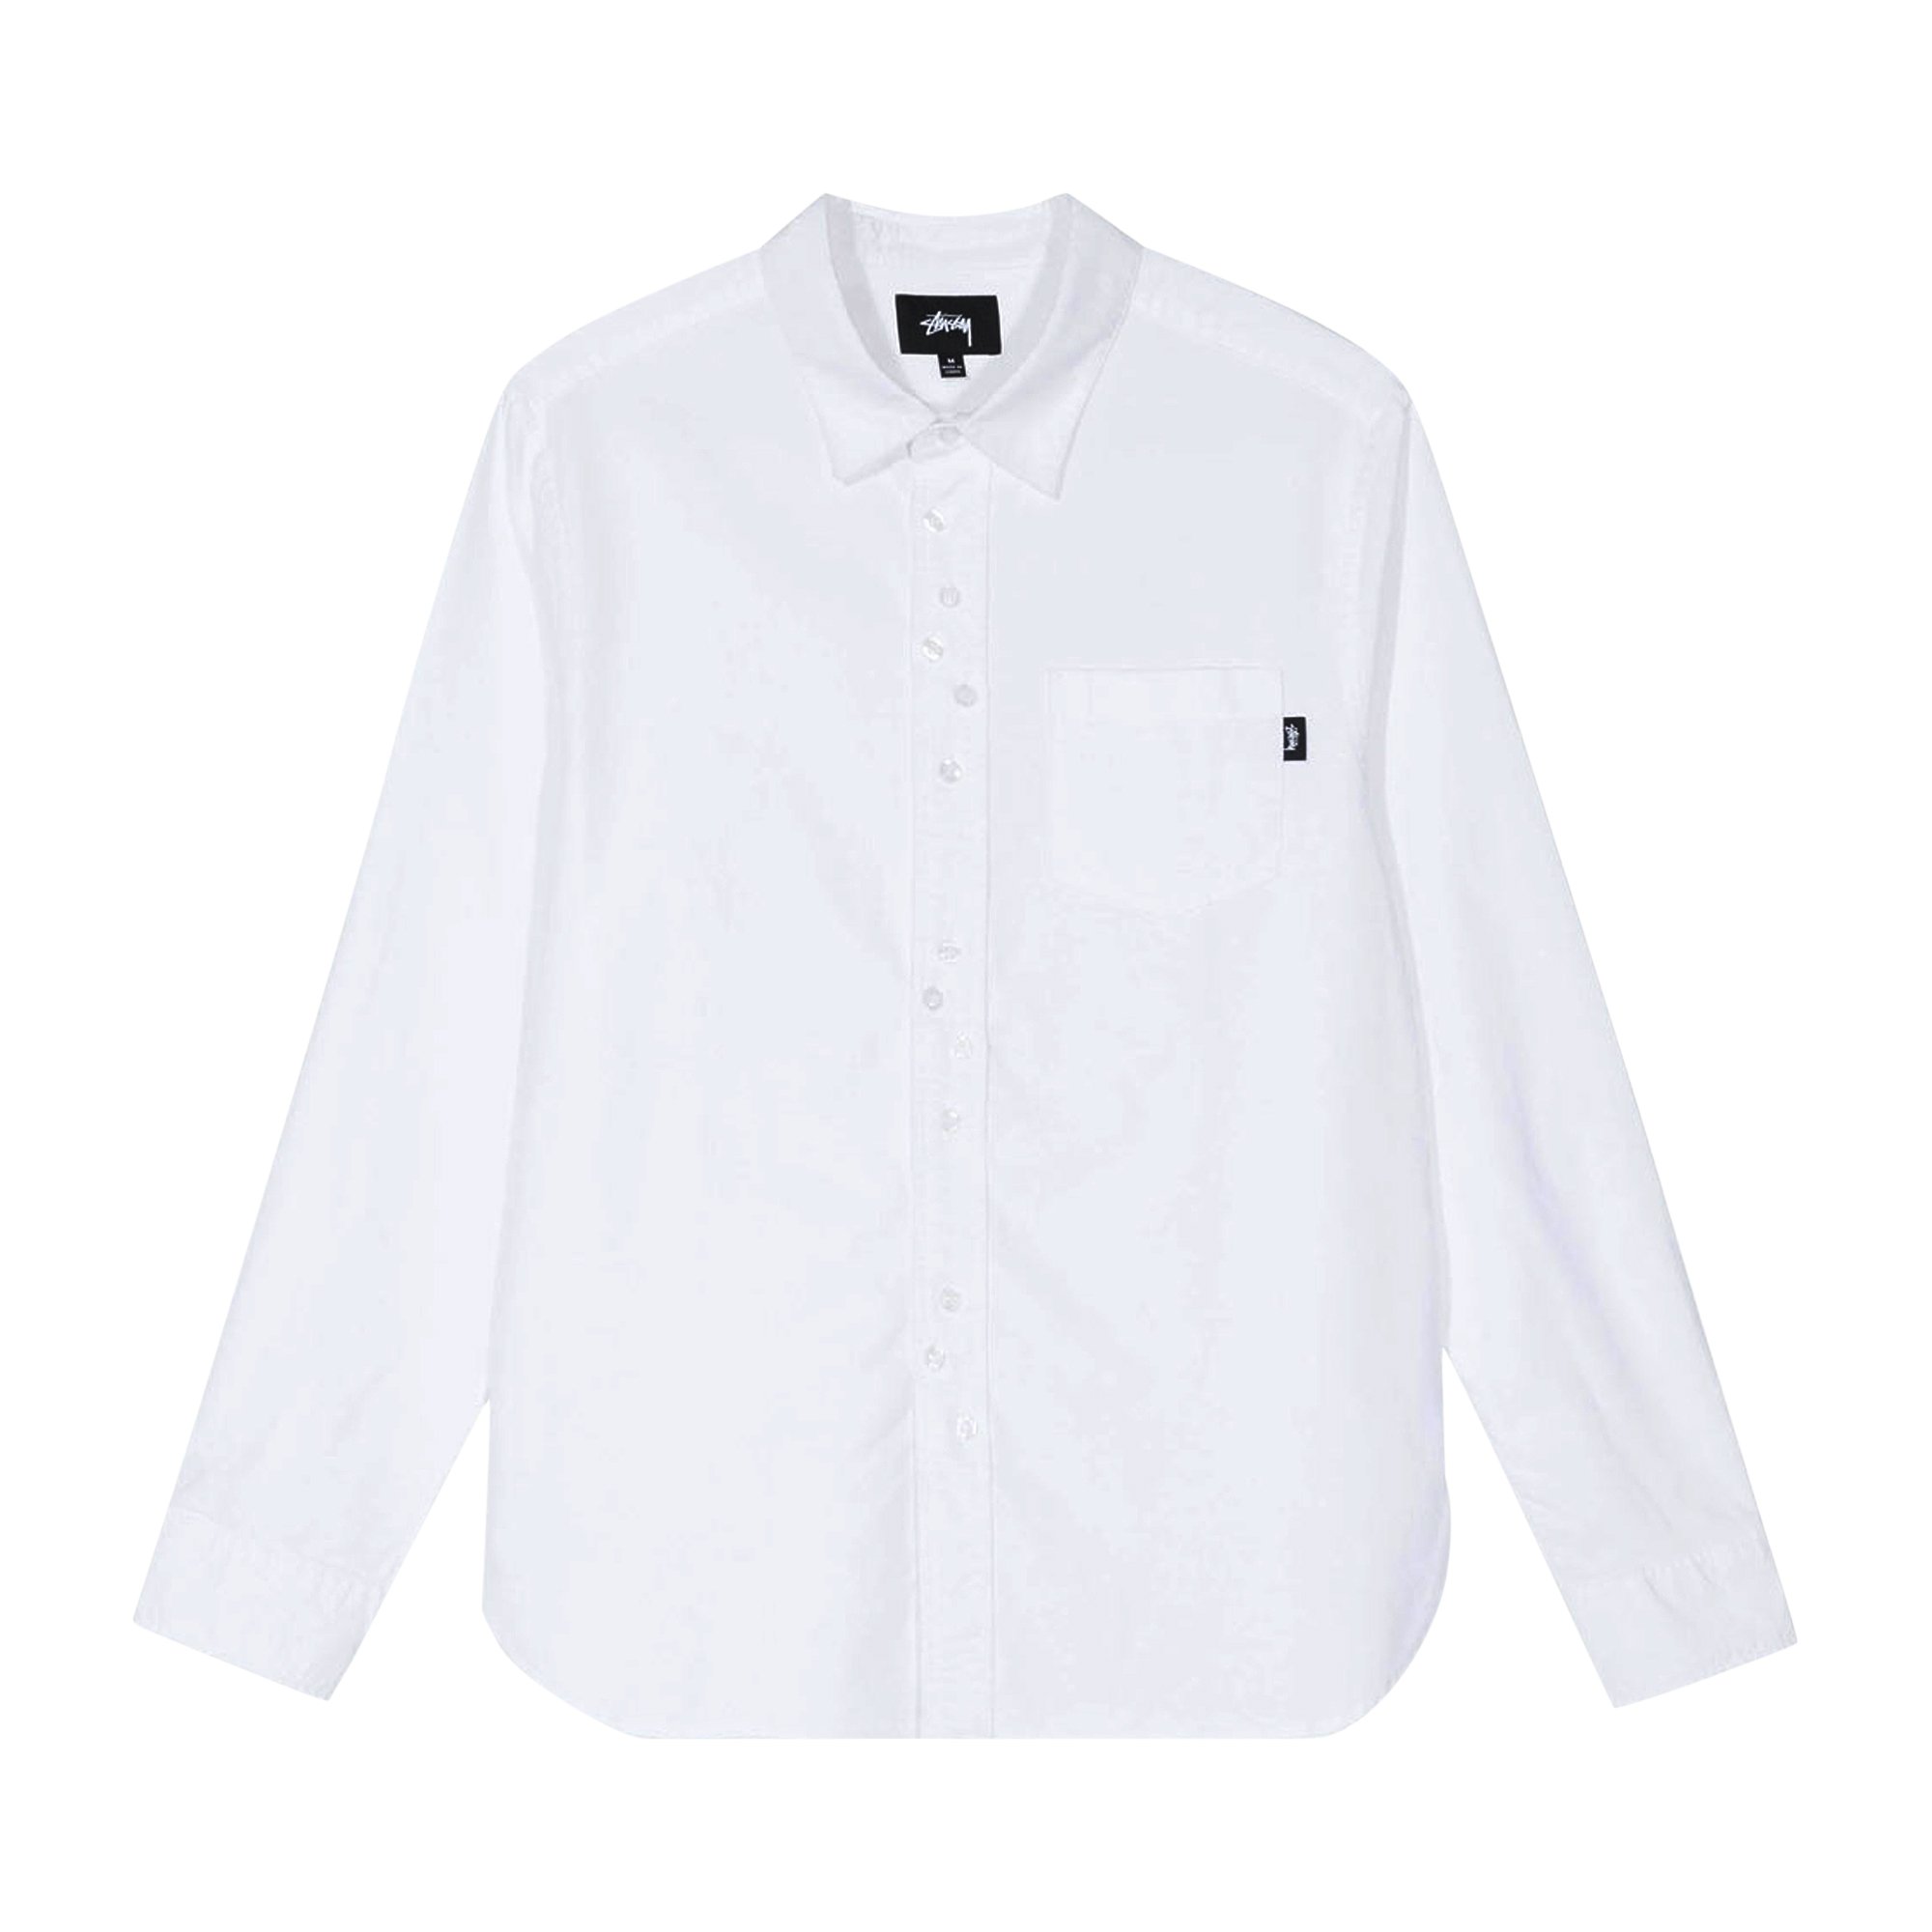 Buy Stussy Crazy Button Oxford Shirt 'White' - 1110097 WHIT | GOAT